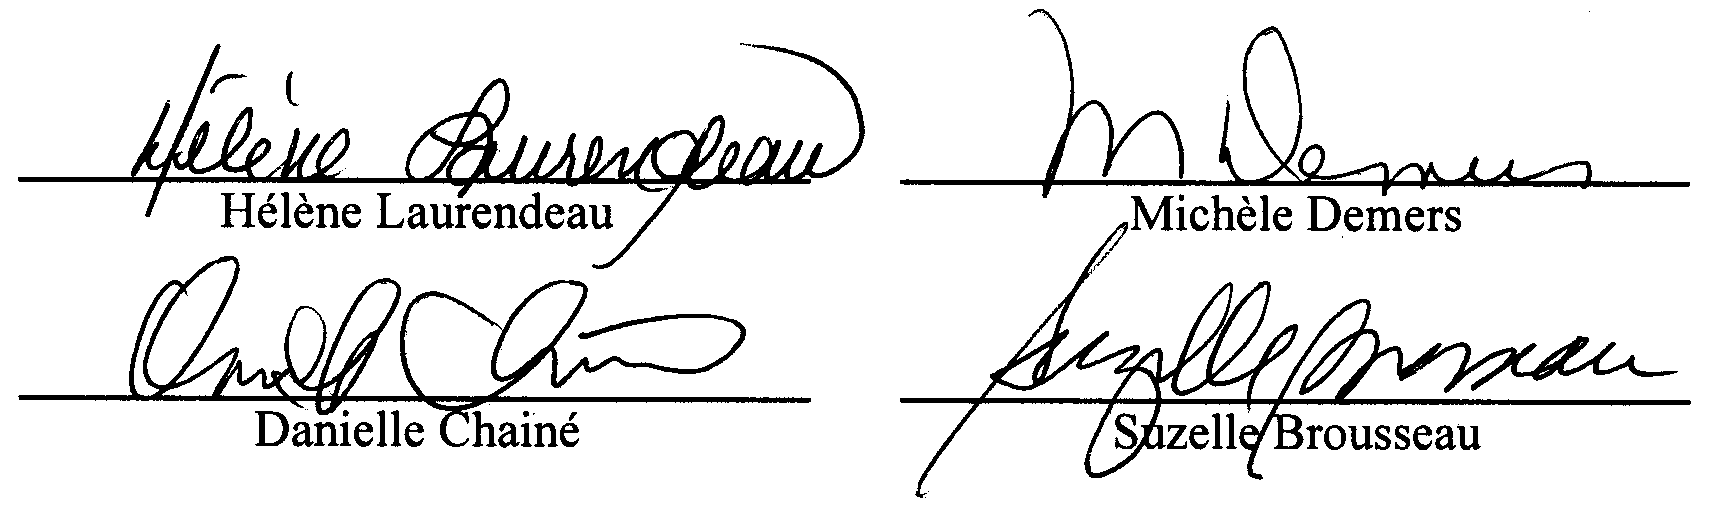 signatures - memoranda of understanding